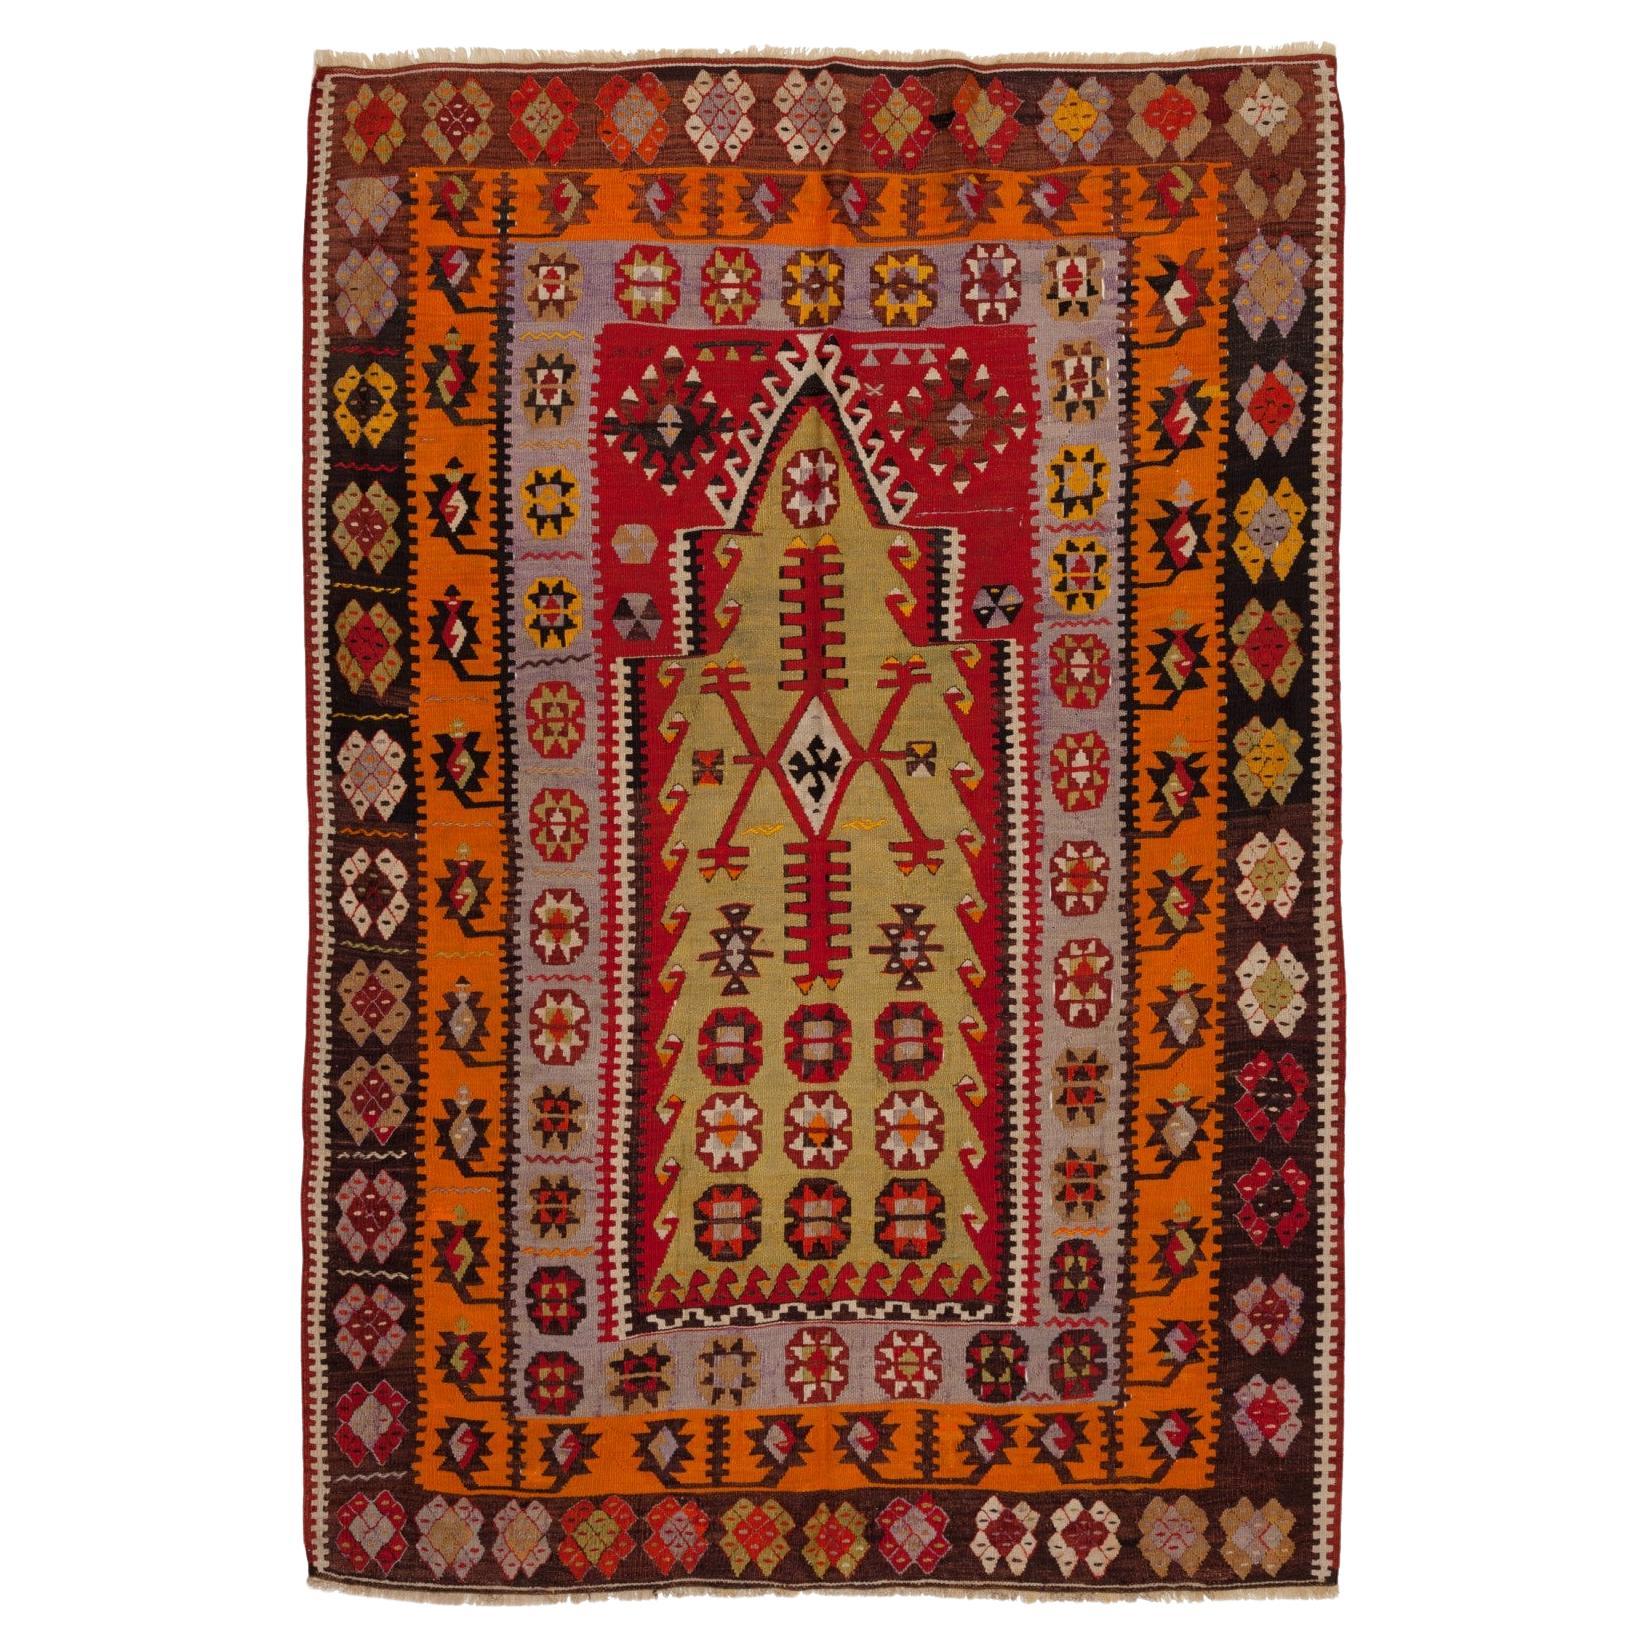 Antique Gomurgen Kayseri Kilim Rug Wool Old Central Anatolian Turkish Carpet